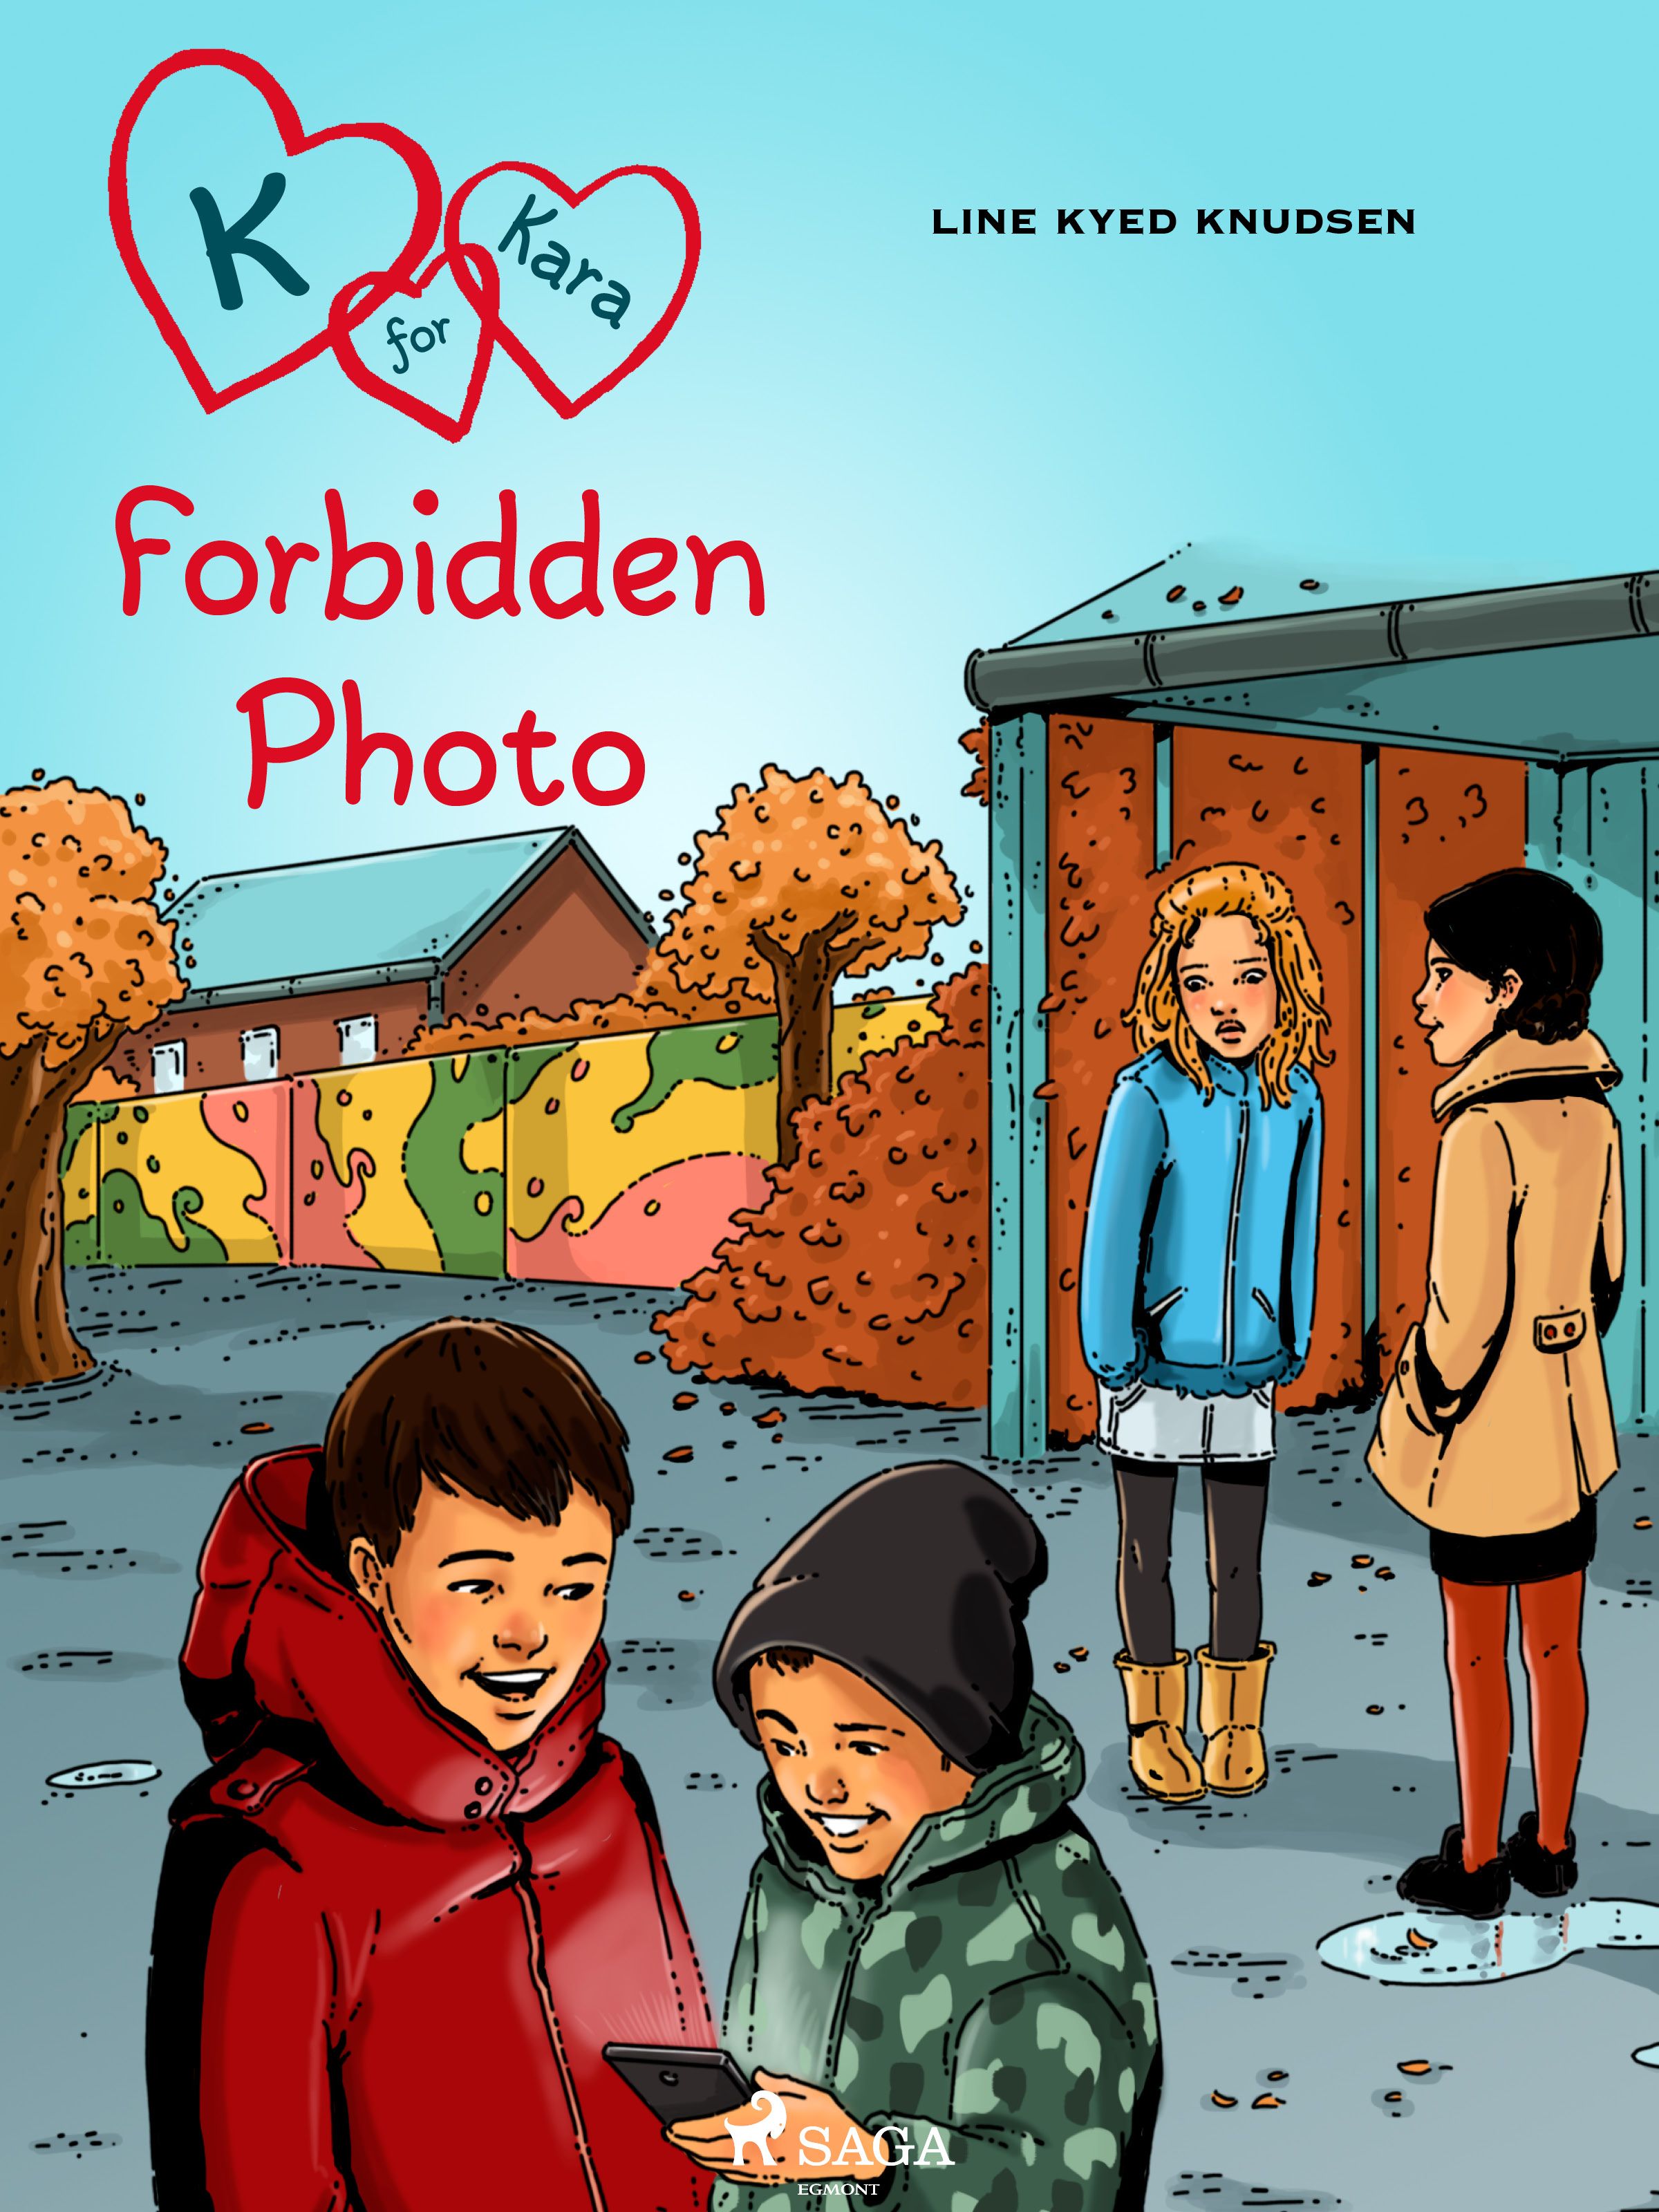 K for Kara 15 - Forbidden Photo, eBook by Line Kyed Knudsen